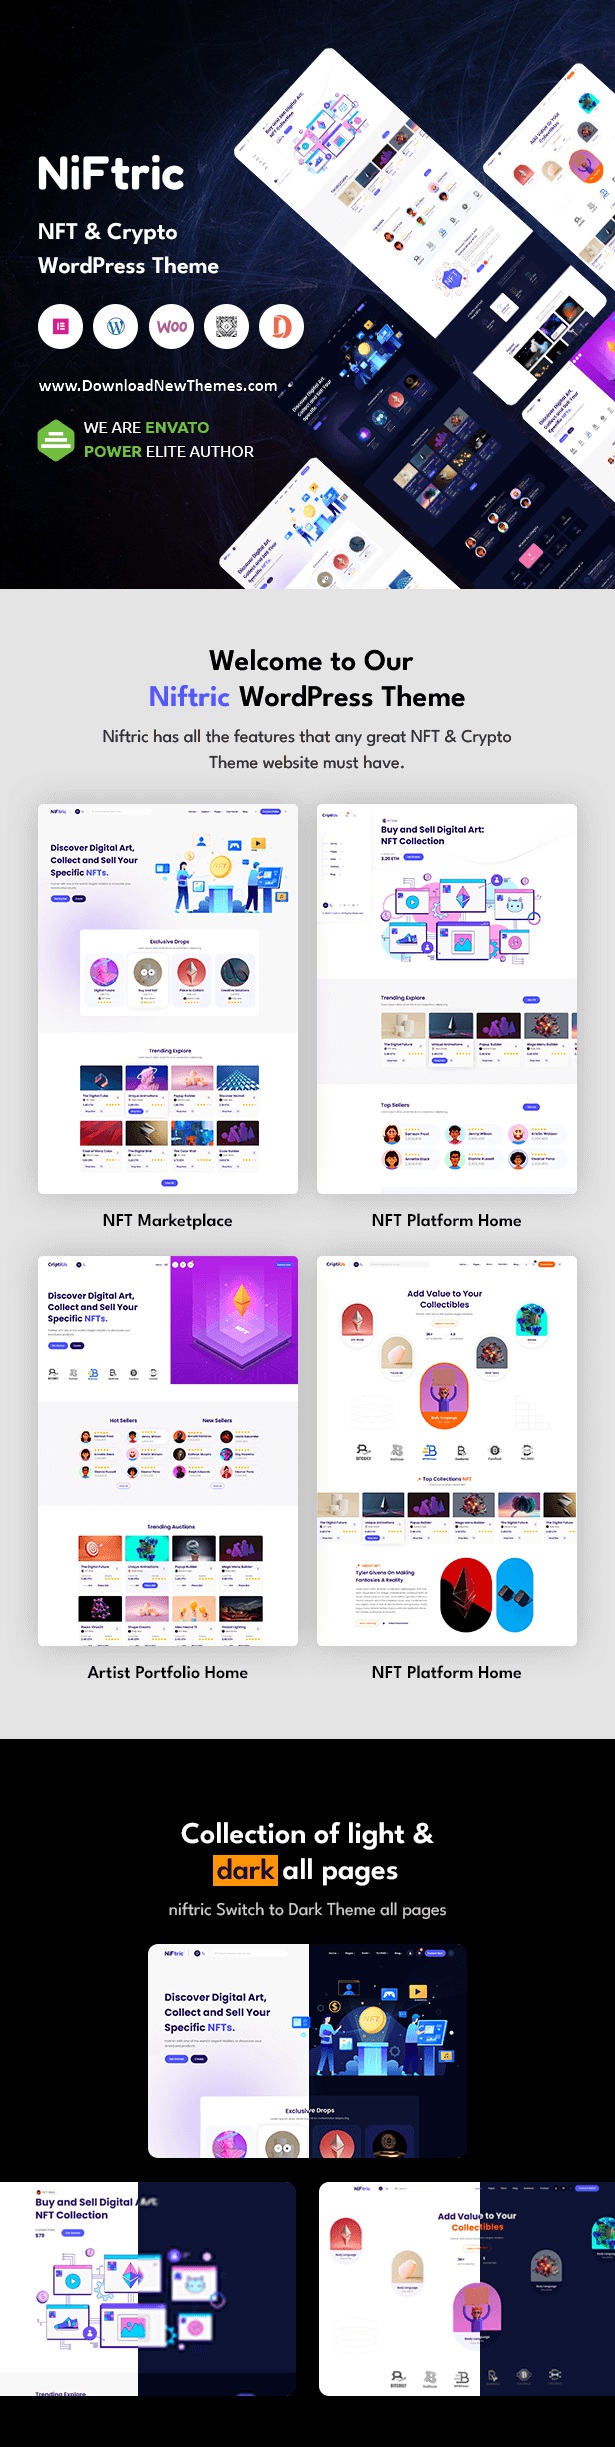 Niftric - NFT Marketplace WordPress Theme Review